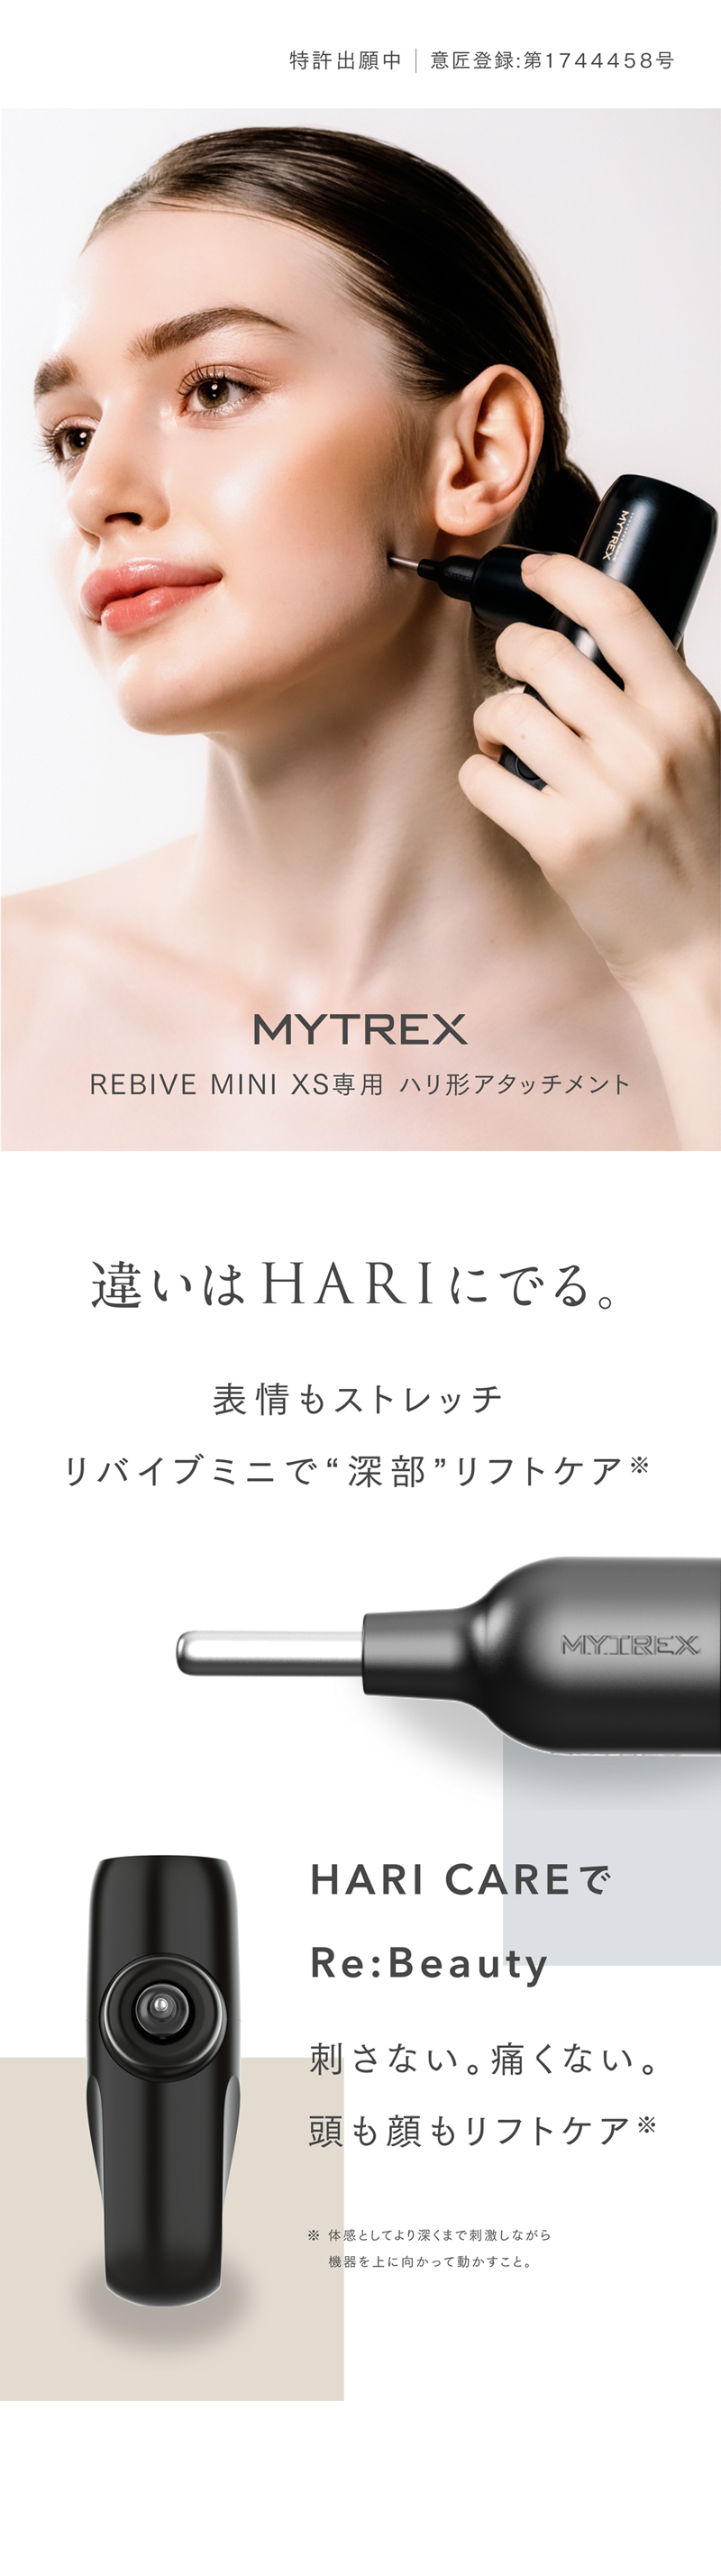 MYTREX REBIVE MINI XS専用 ハリ形アタッチメント ハリ型アタッチメント リフトケア 表情筋ケア 頭皮ケア 表情筋ストレッチ  ボディケア フェイスケア